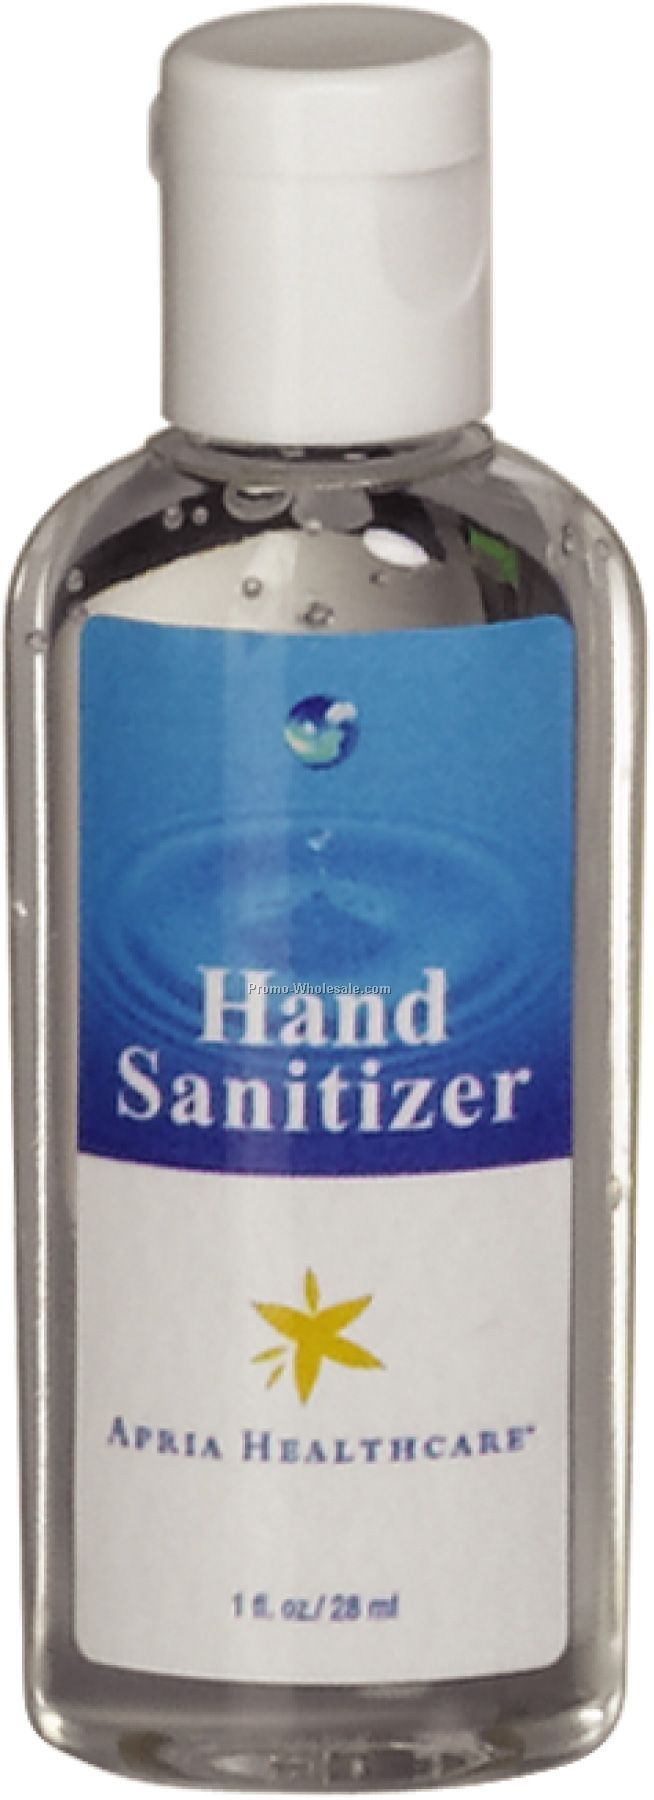 1 Oz. Clear Sanitizer